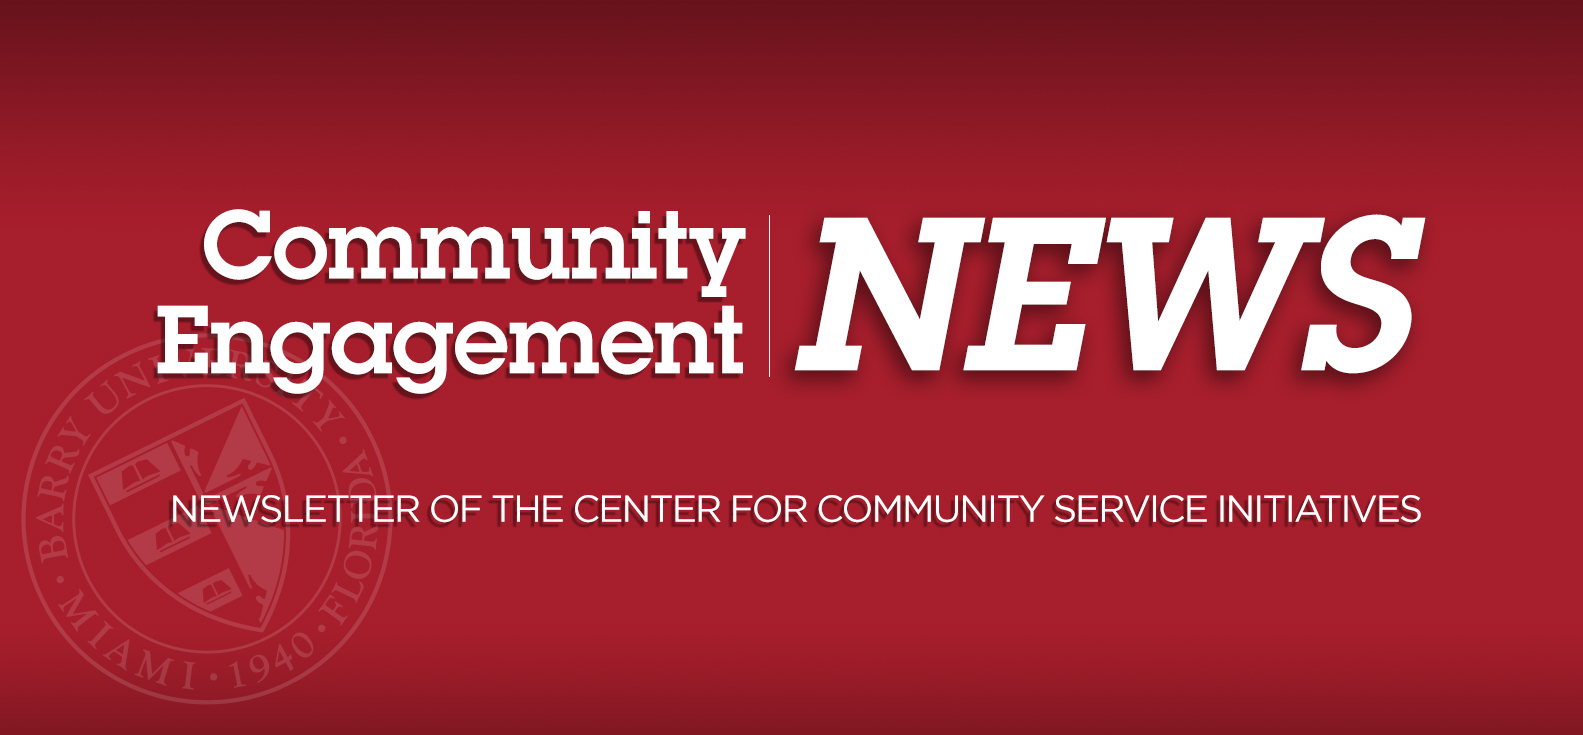 Community Engagement News